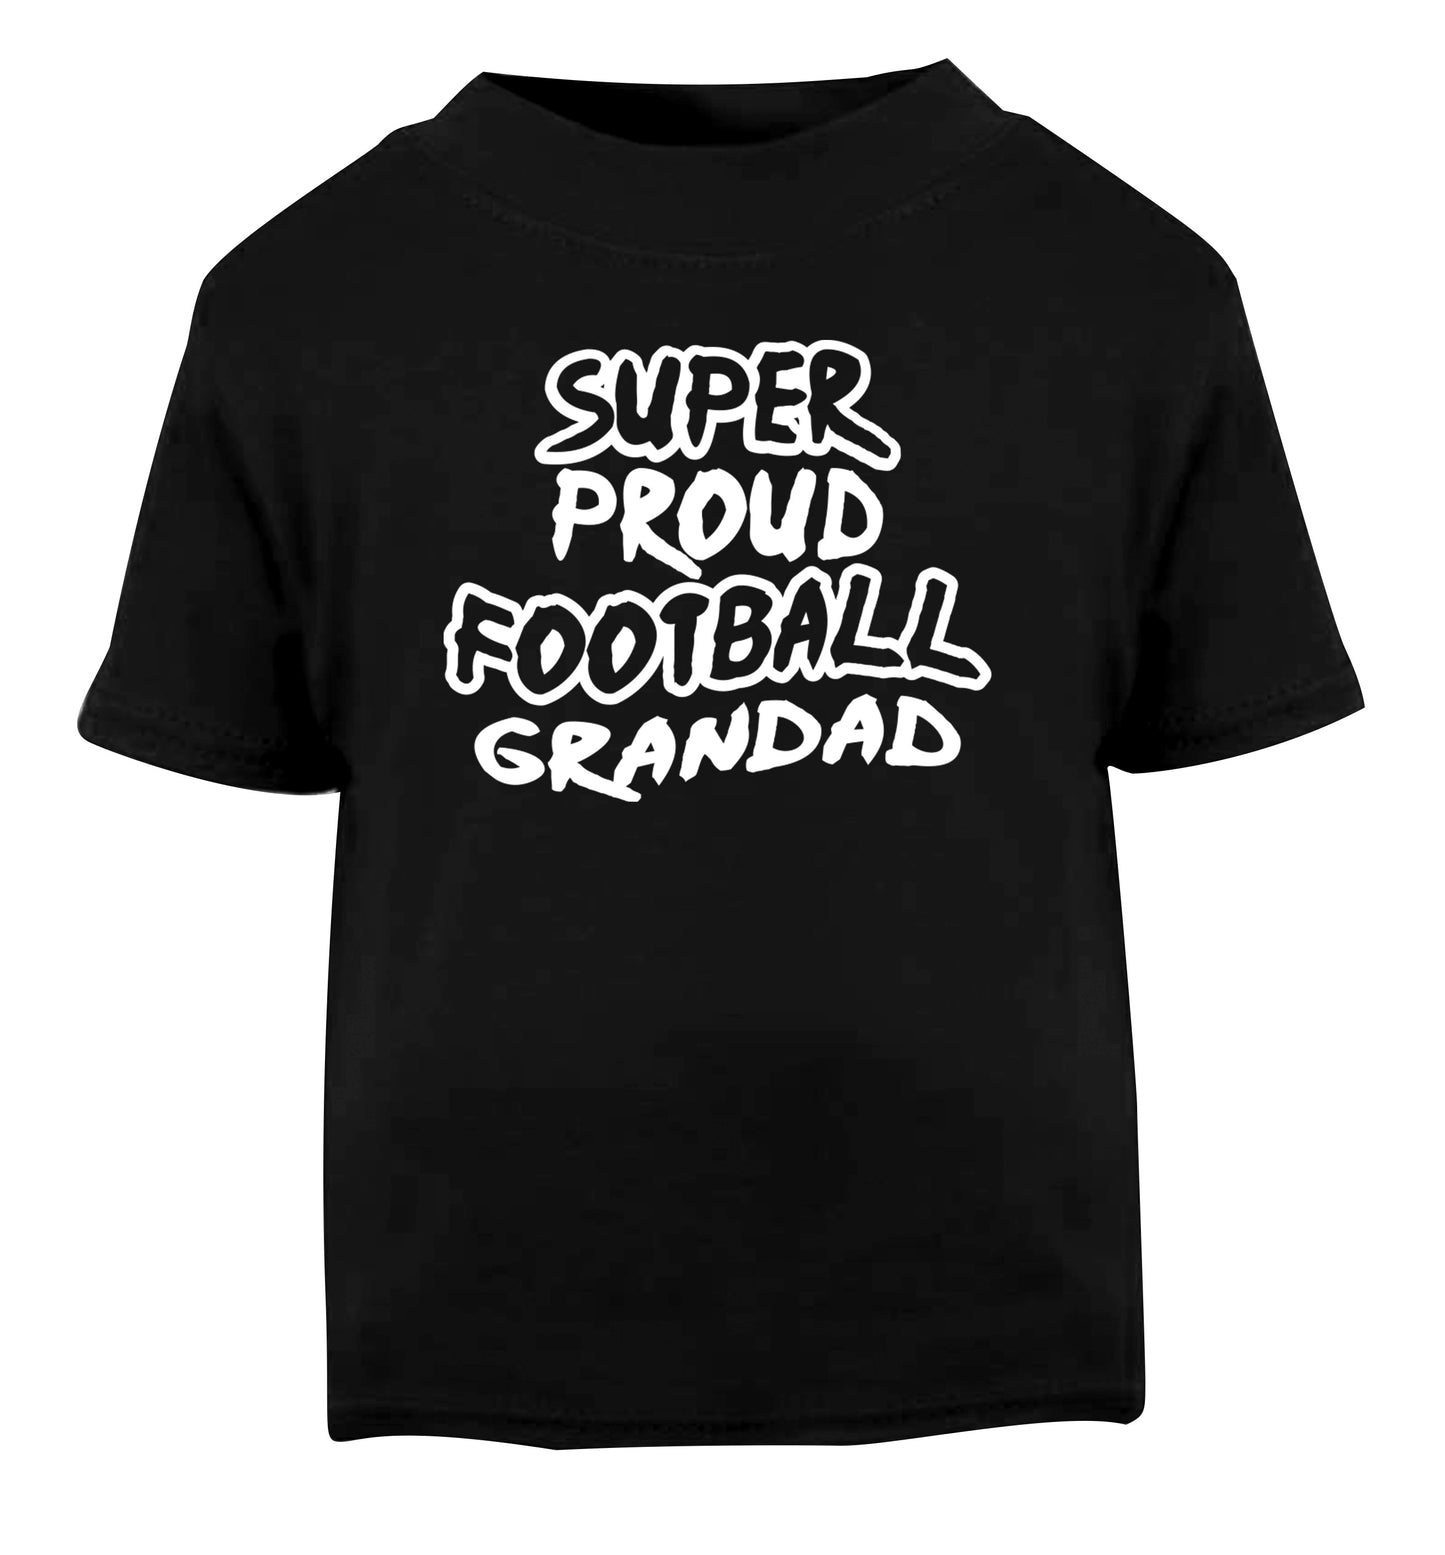 Super proud football grandad Black Baby Toddler Tshirt 2 years